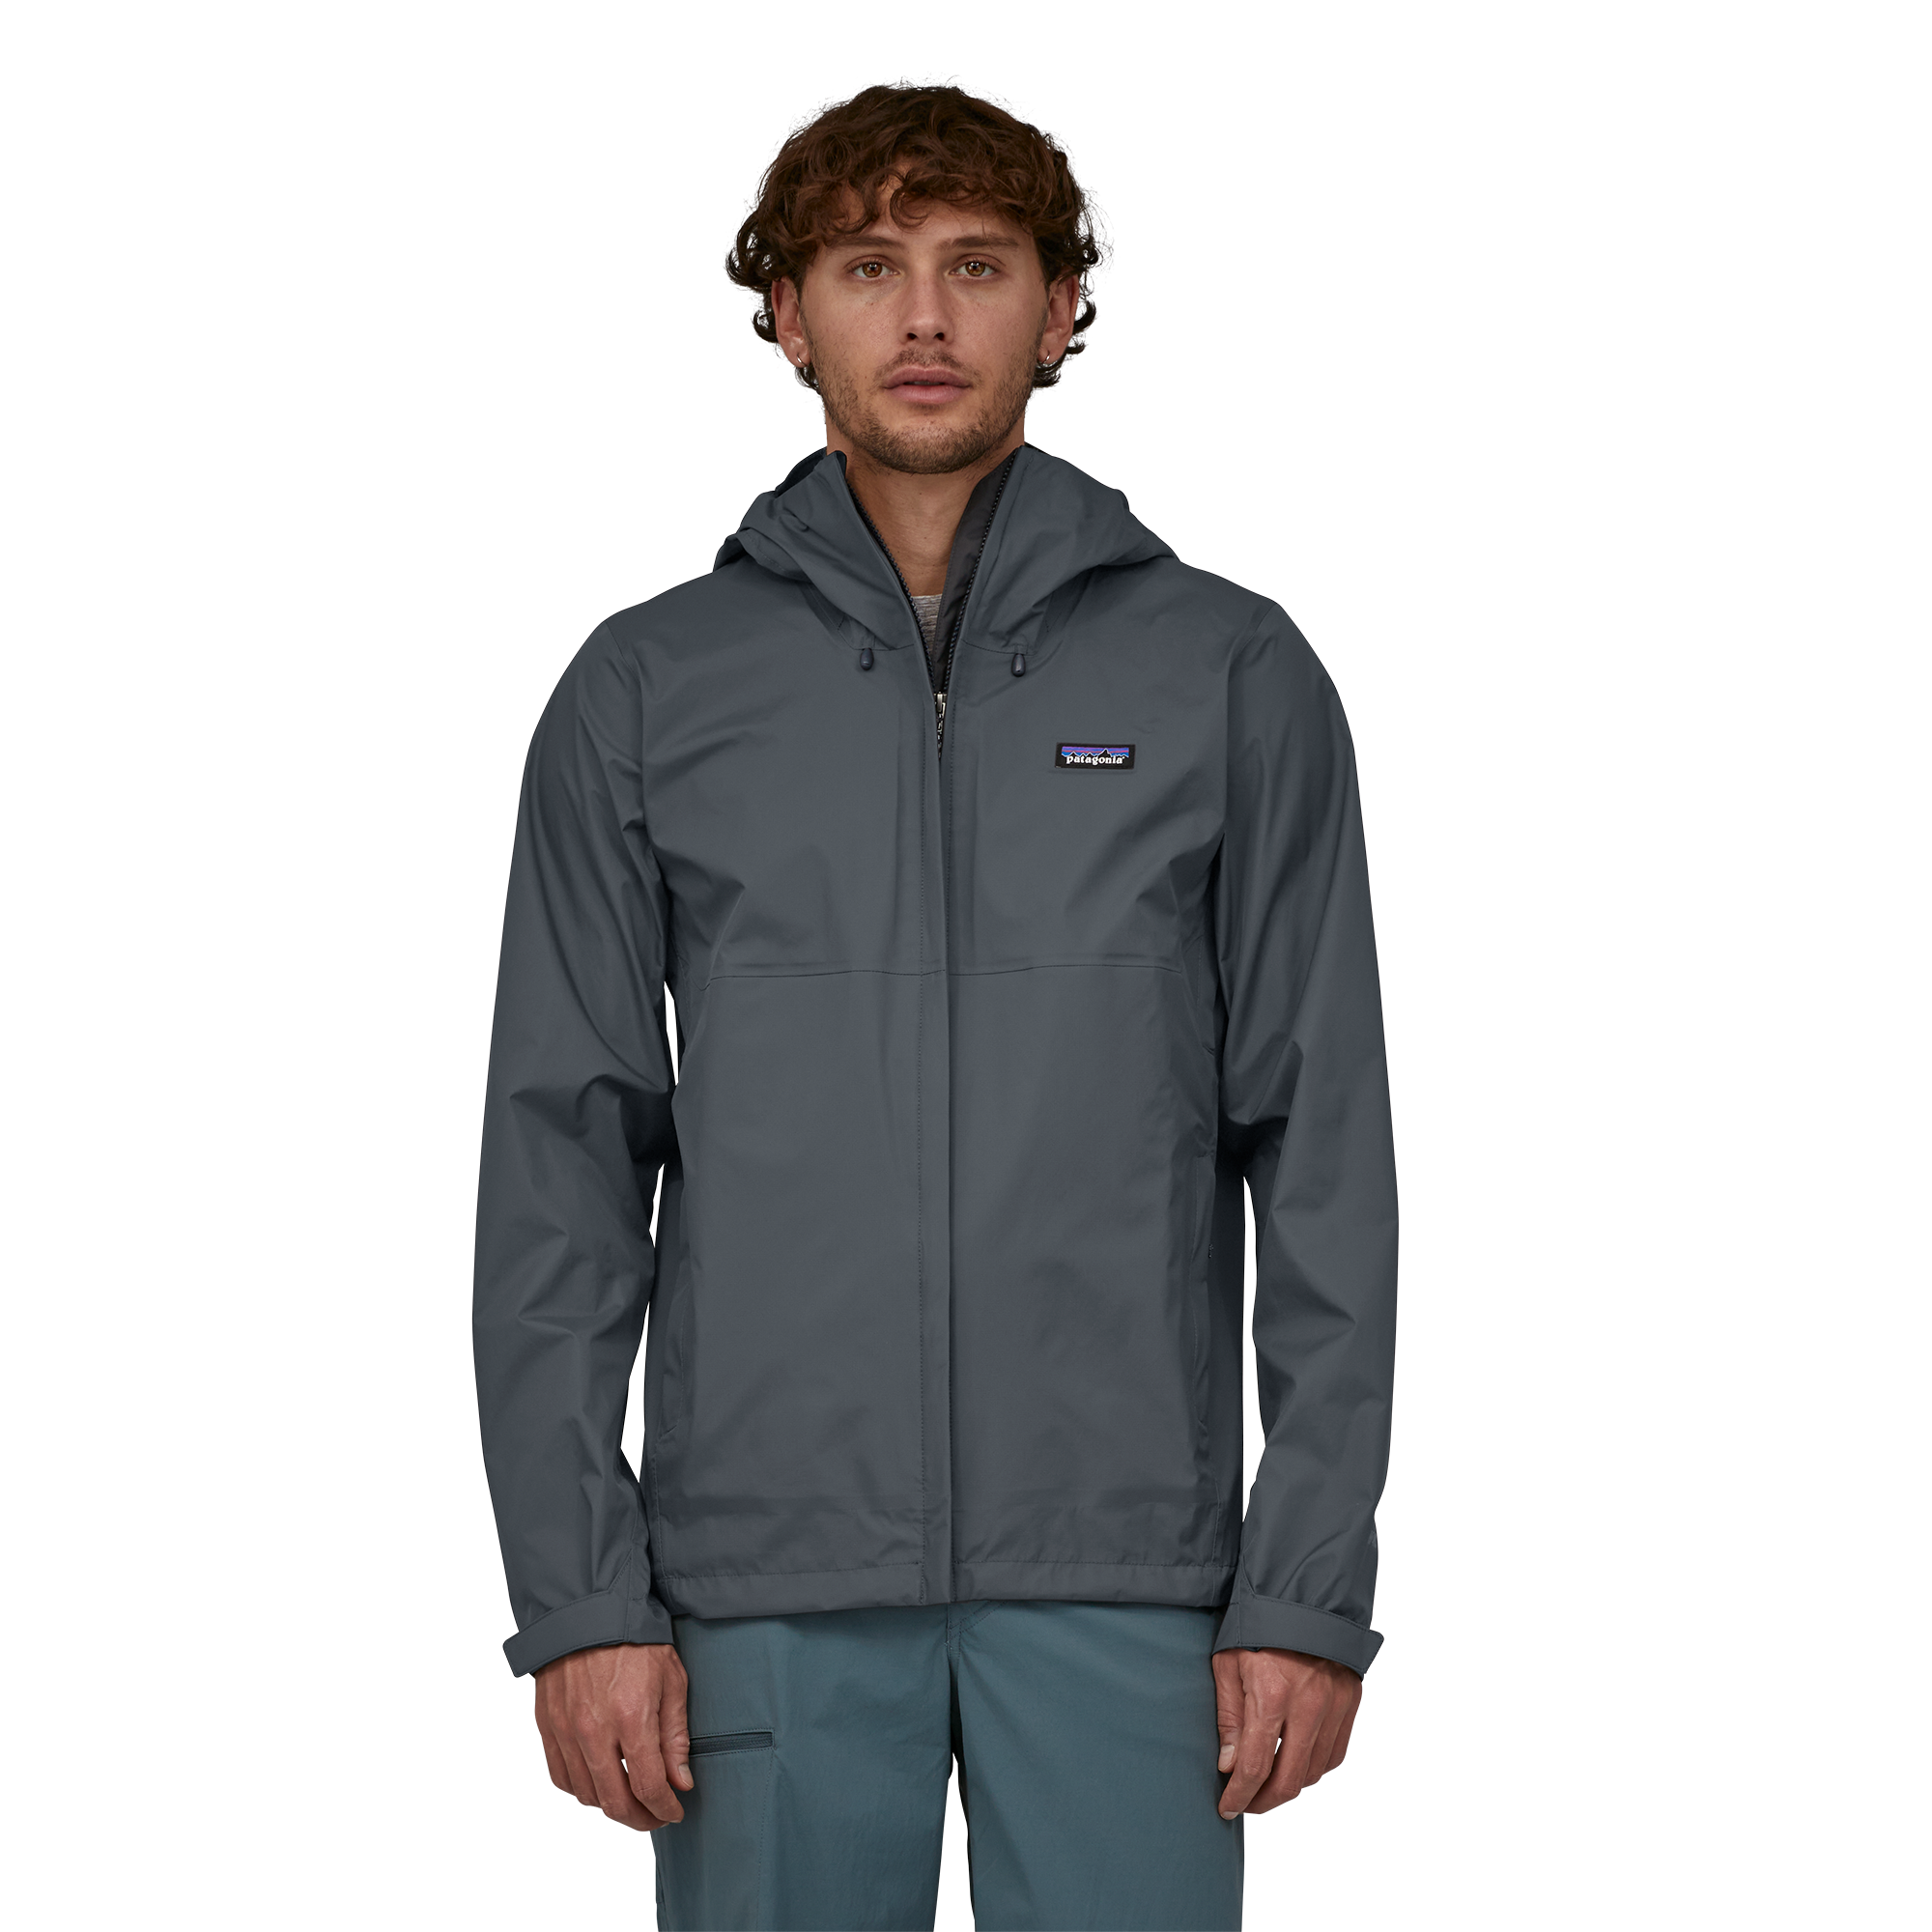 Patagonia Men's Torrentshell 3L Rain Jacket